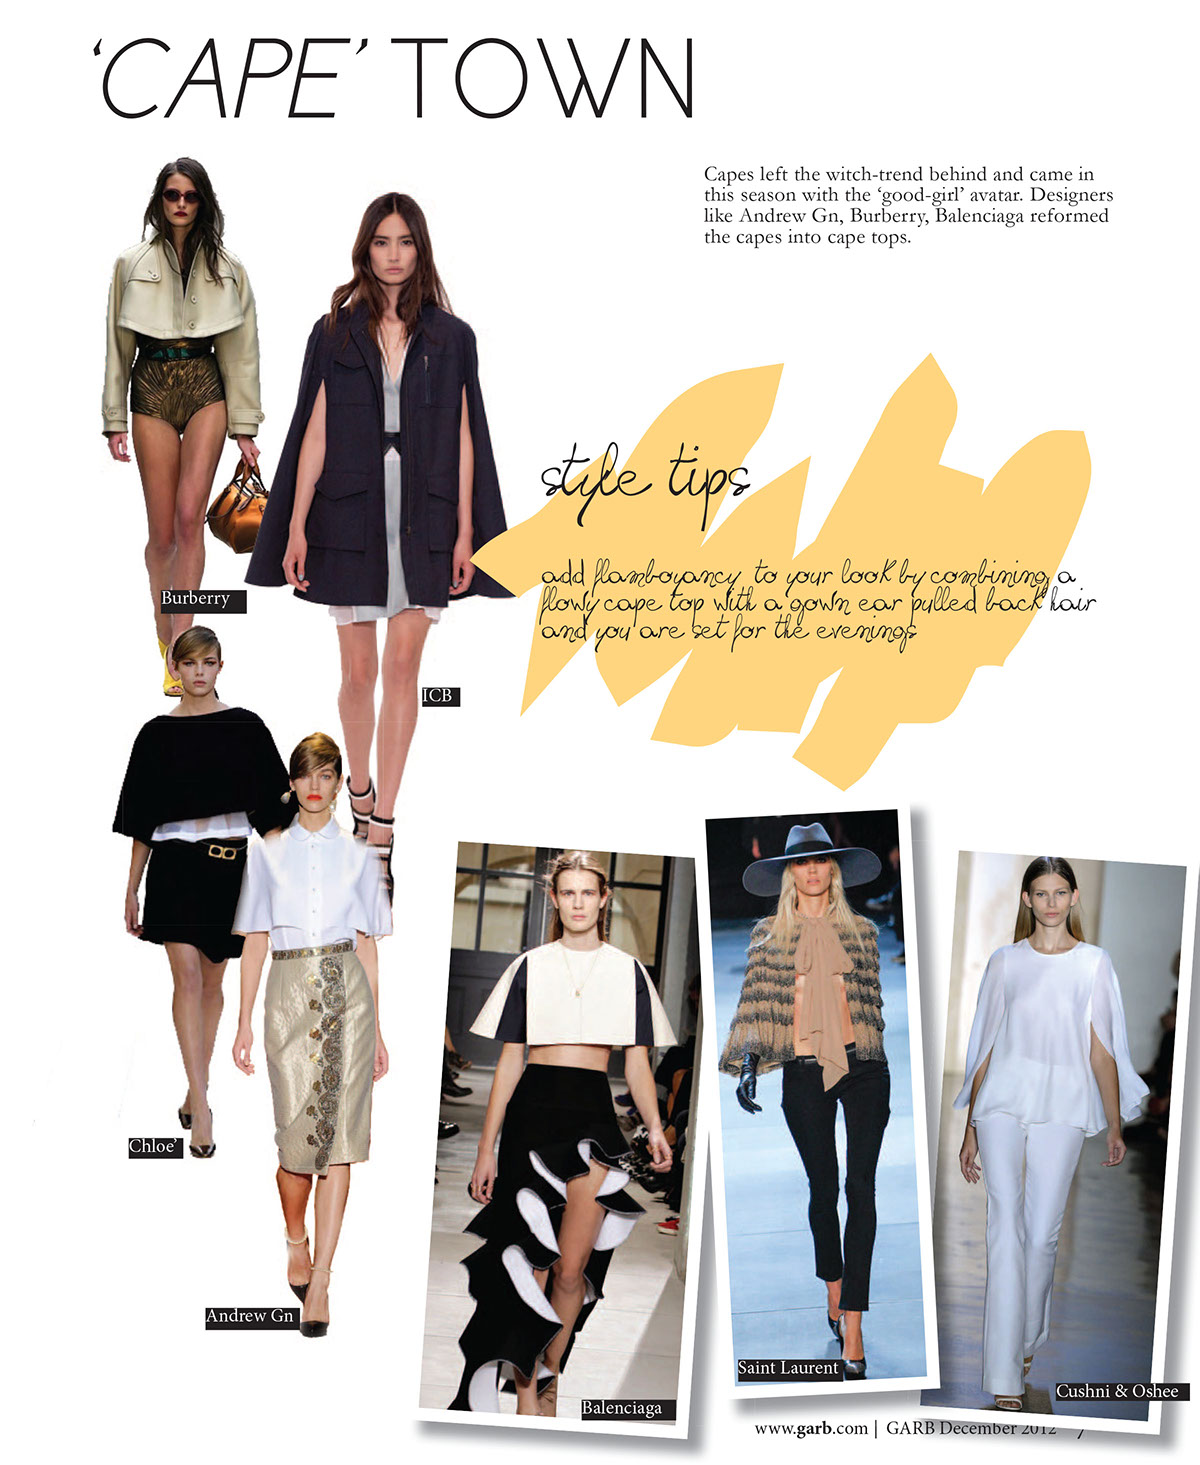 Fashionstyling trends springsummer editorial